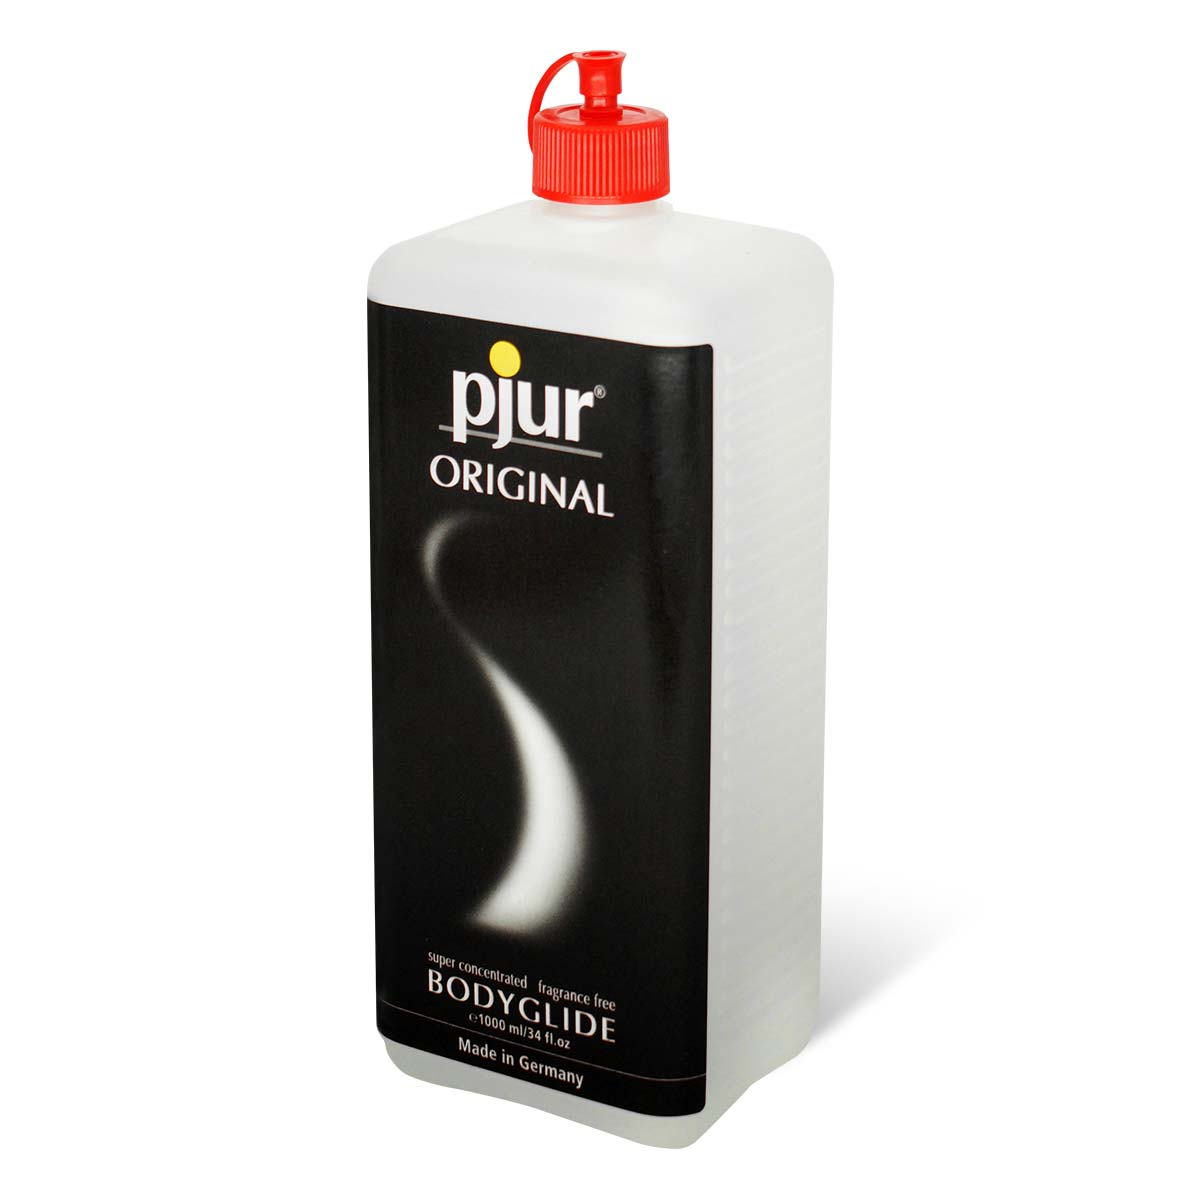 pjur ORIGINAL 1000ml 矽性潤滑劑 - 國際版-p_1